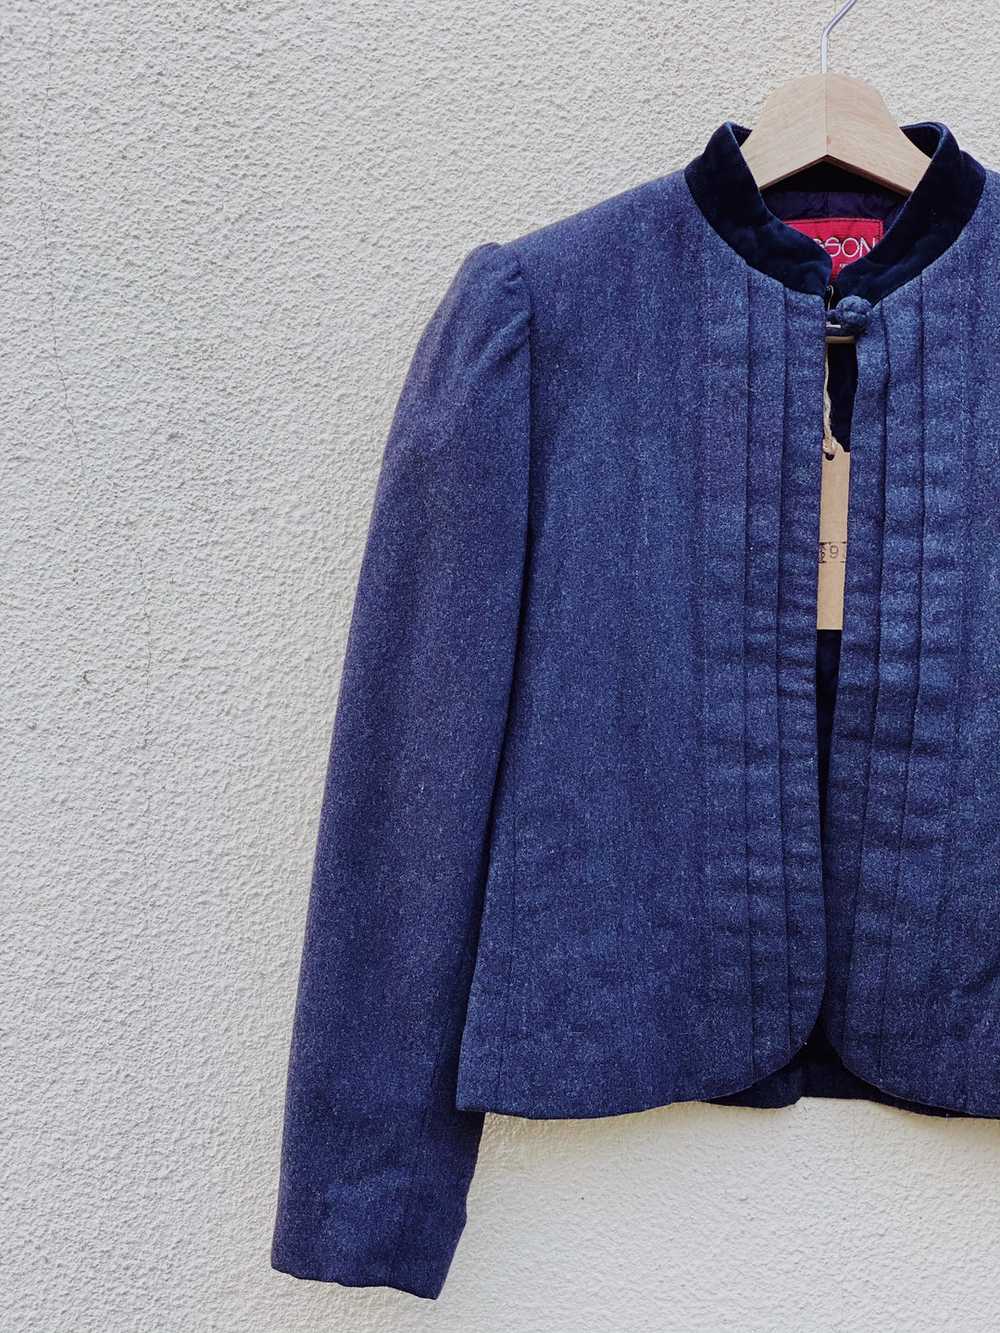 Vintage Sasson Charcoal Cropped Jacket - image 2